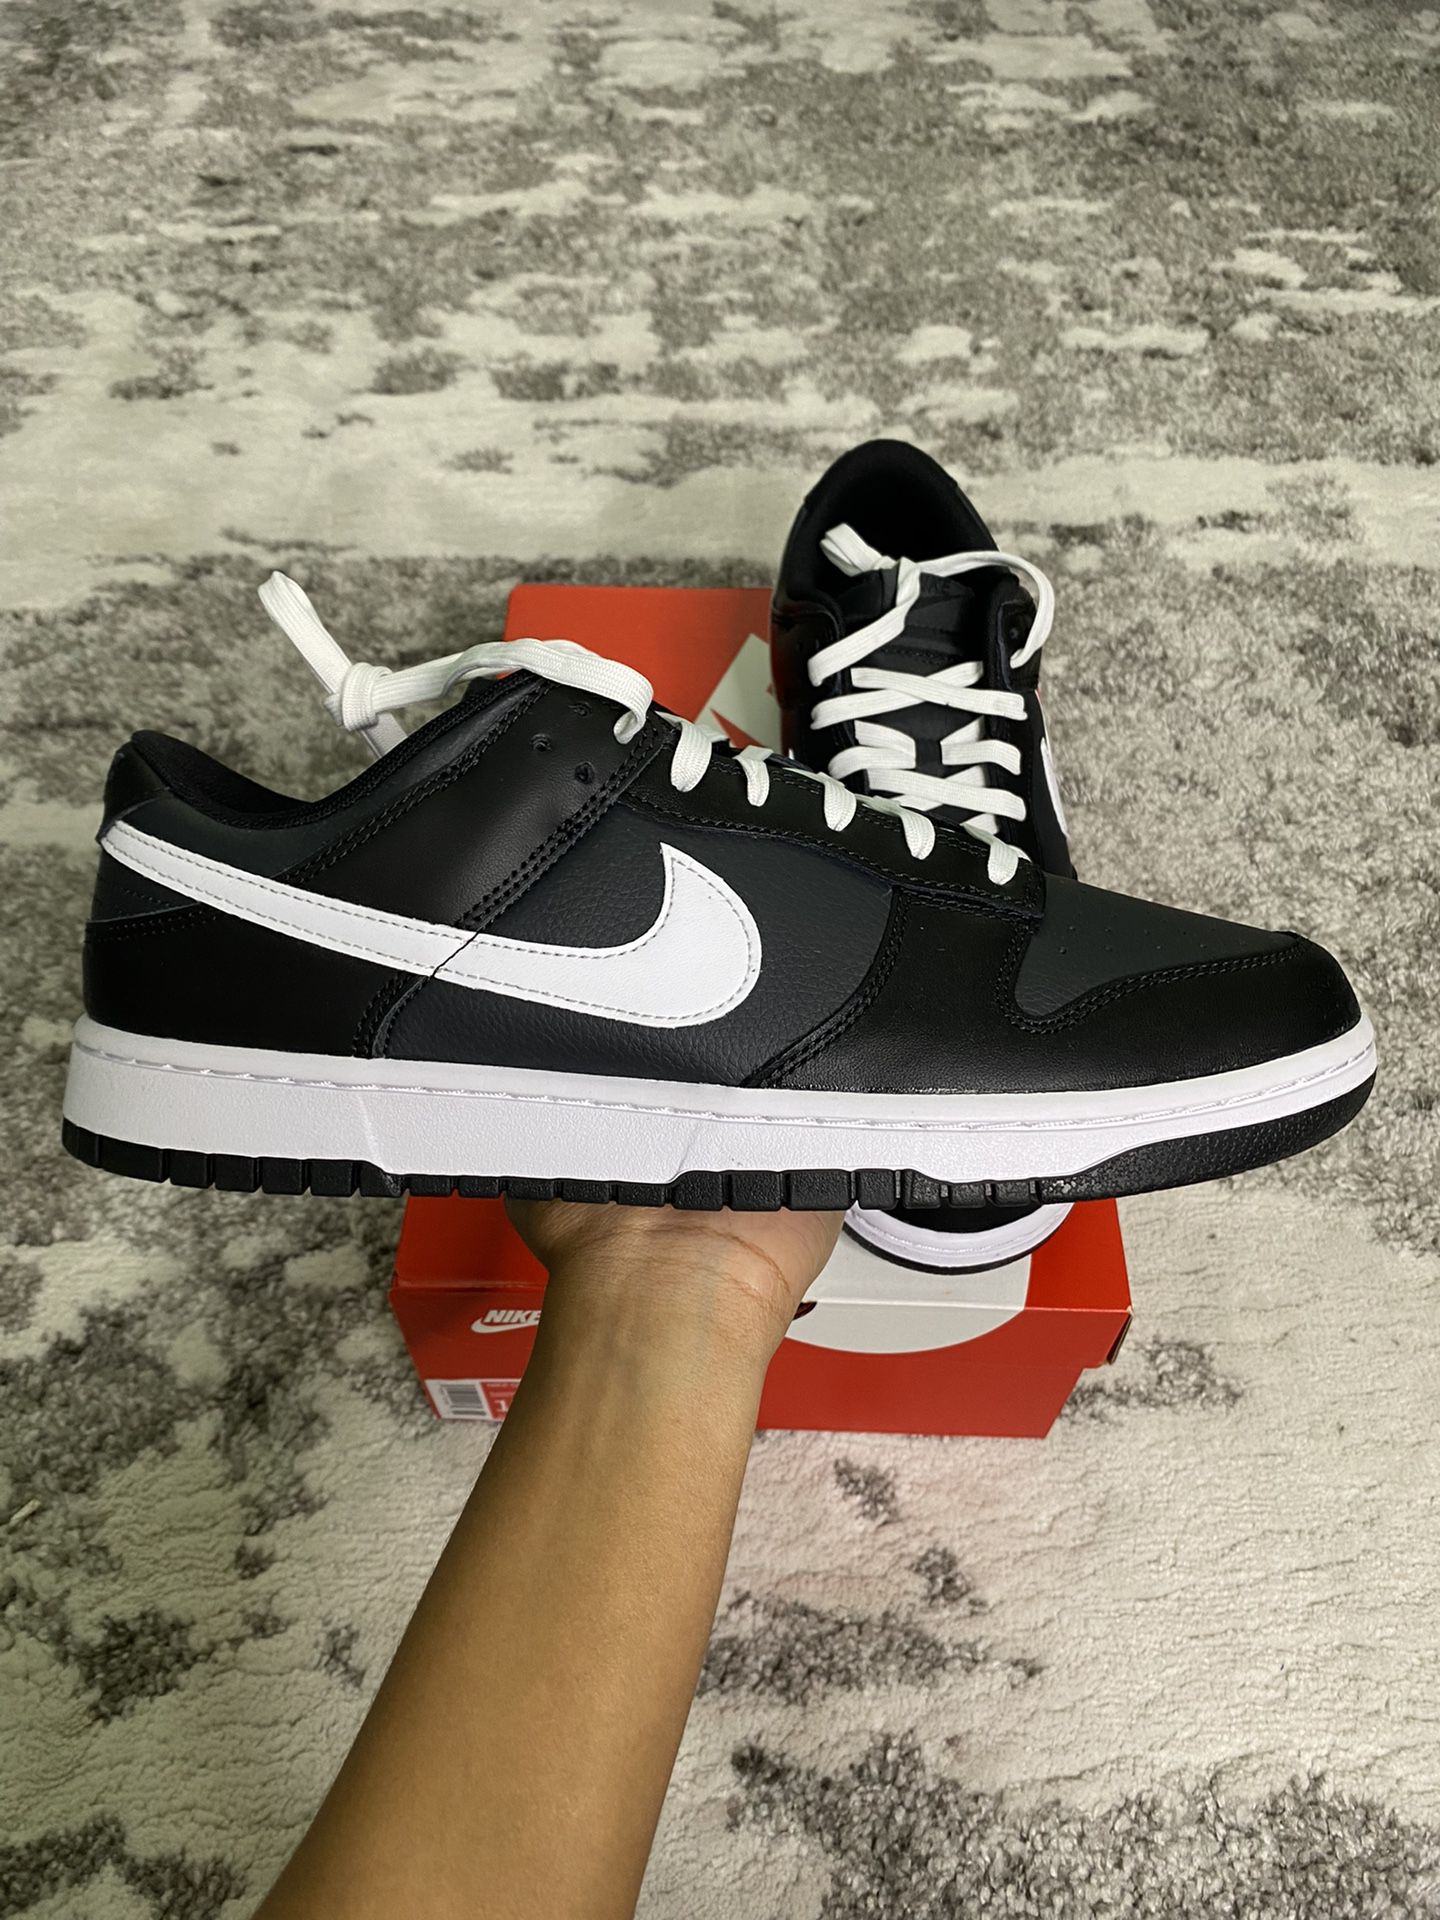 Nike Dunk Low “Reverse Panda” Off-noir Size 12M Brand New!